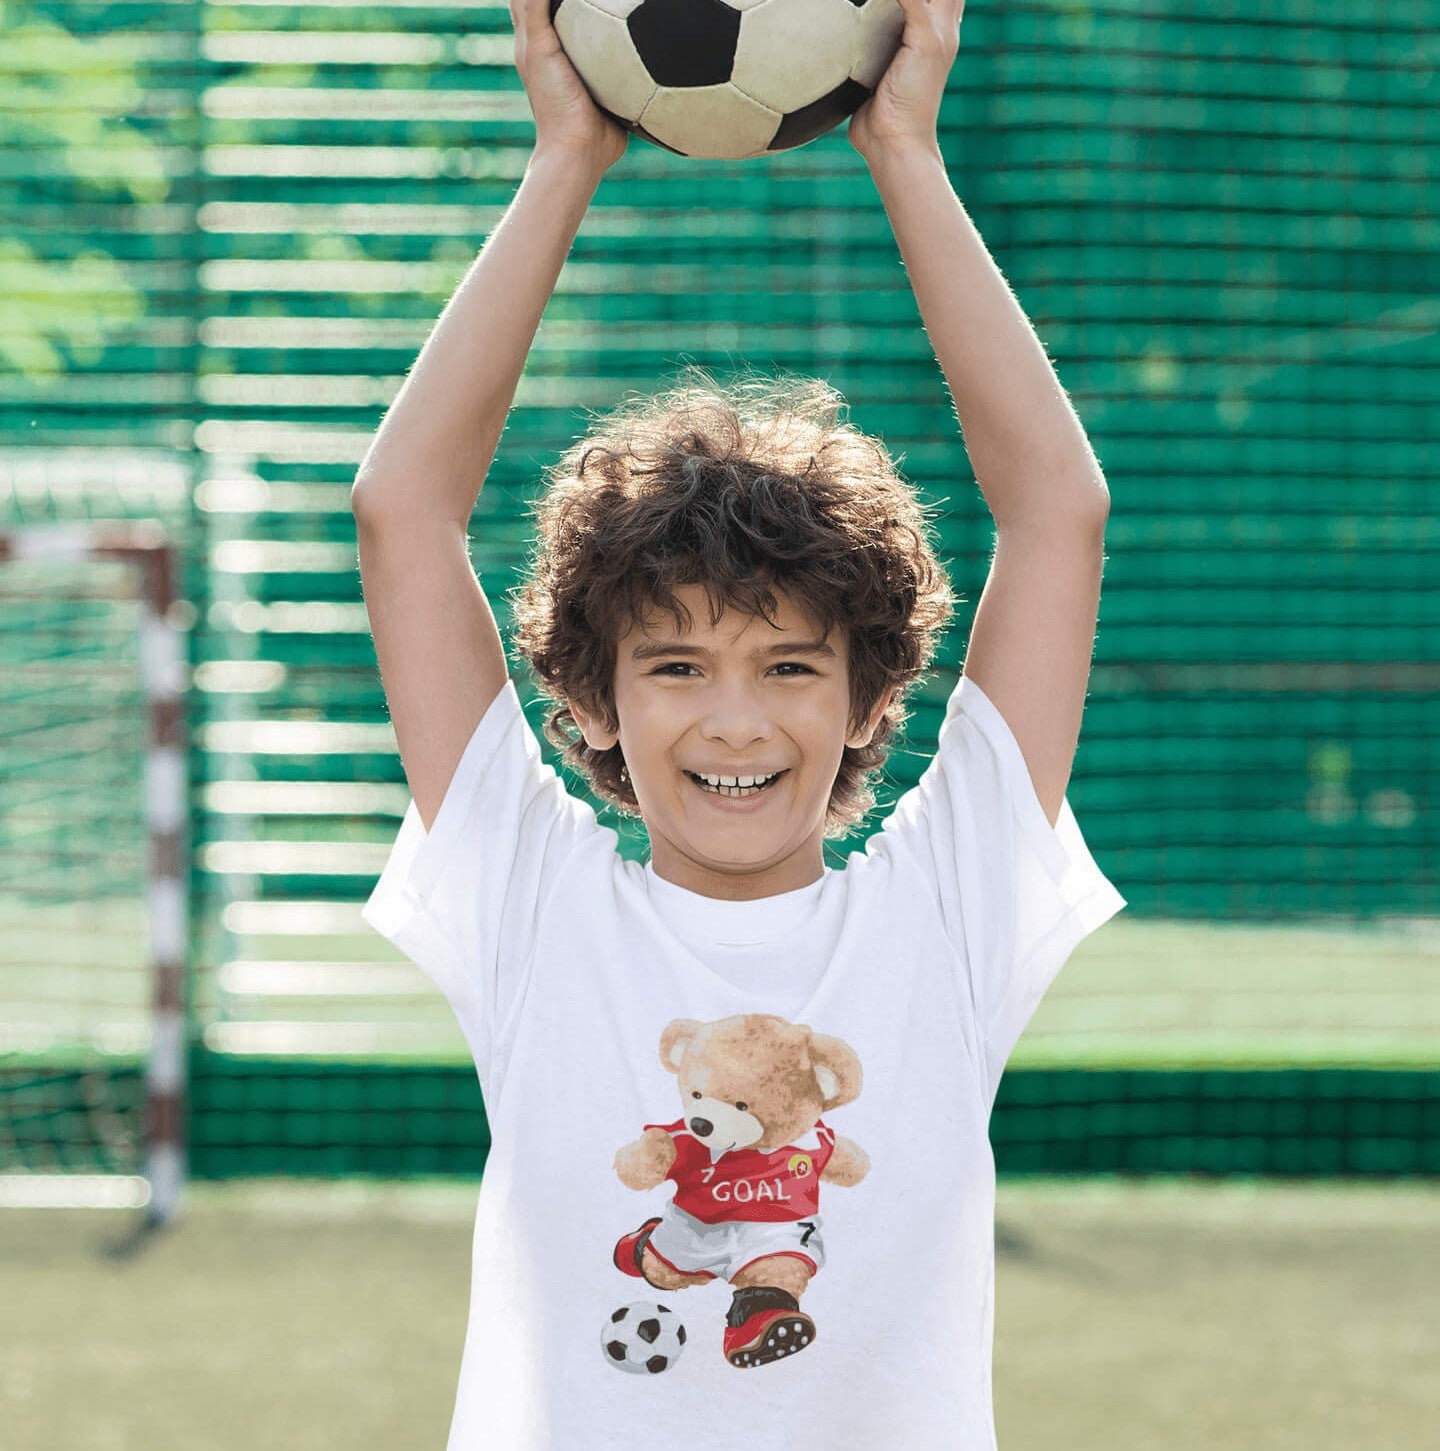 Eco-Friendly Soccer Bear Kids T-shirt